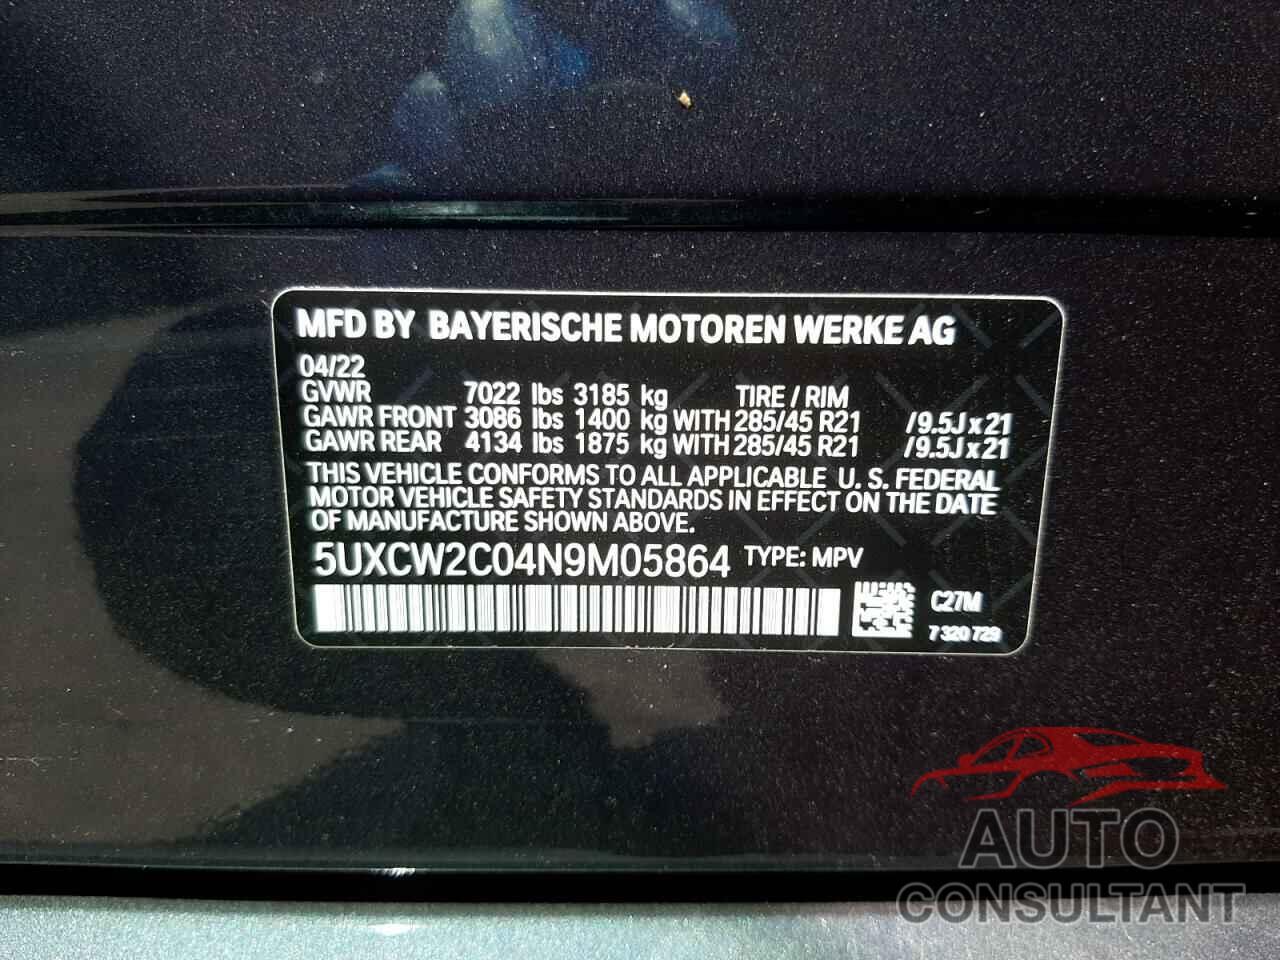 BMW X7 2022 - 5UXCW2C04N9M05864